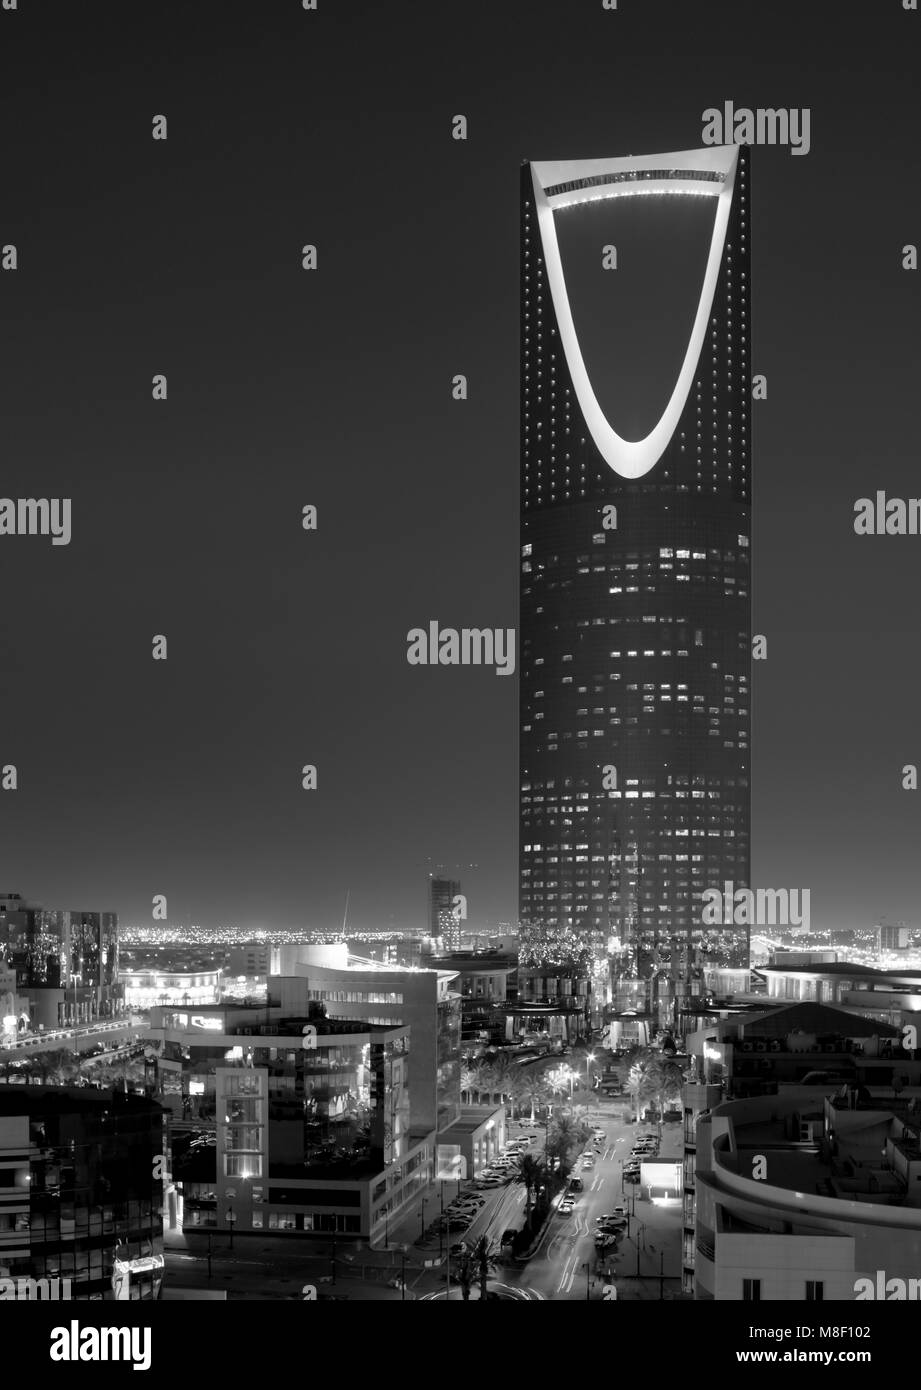 RIYADH - marzo 27: Al Mamlaka Tower Skyscaper e Surroundingsin Riyadh, Arabia Saudita. su 27-03-2011 Foto Stock